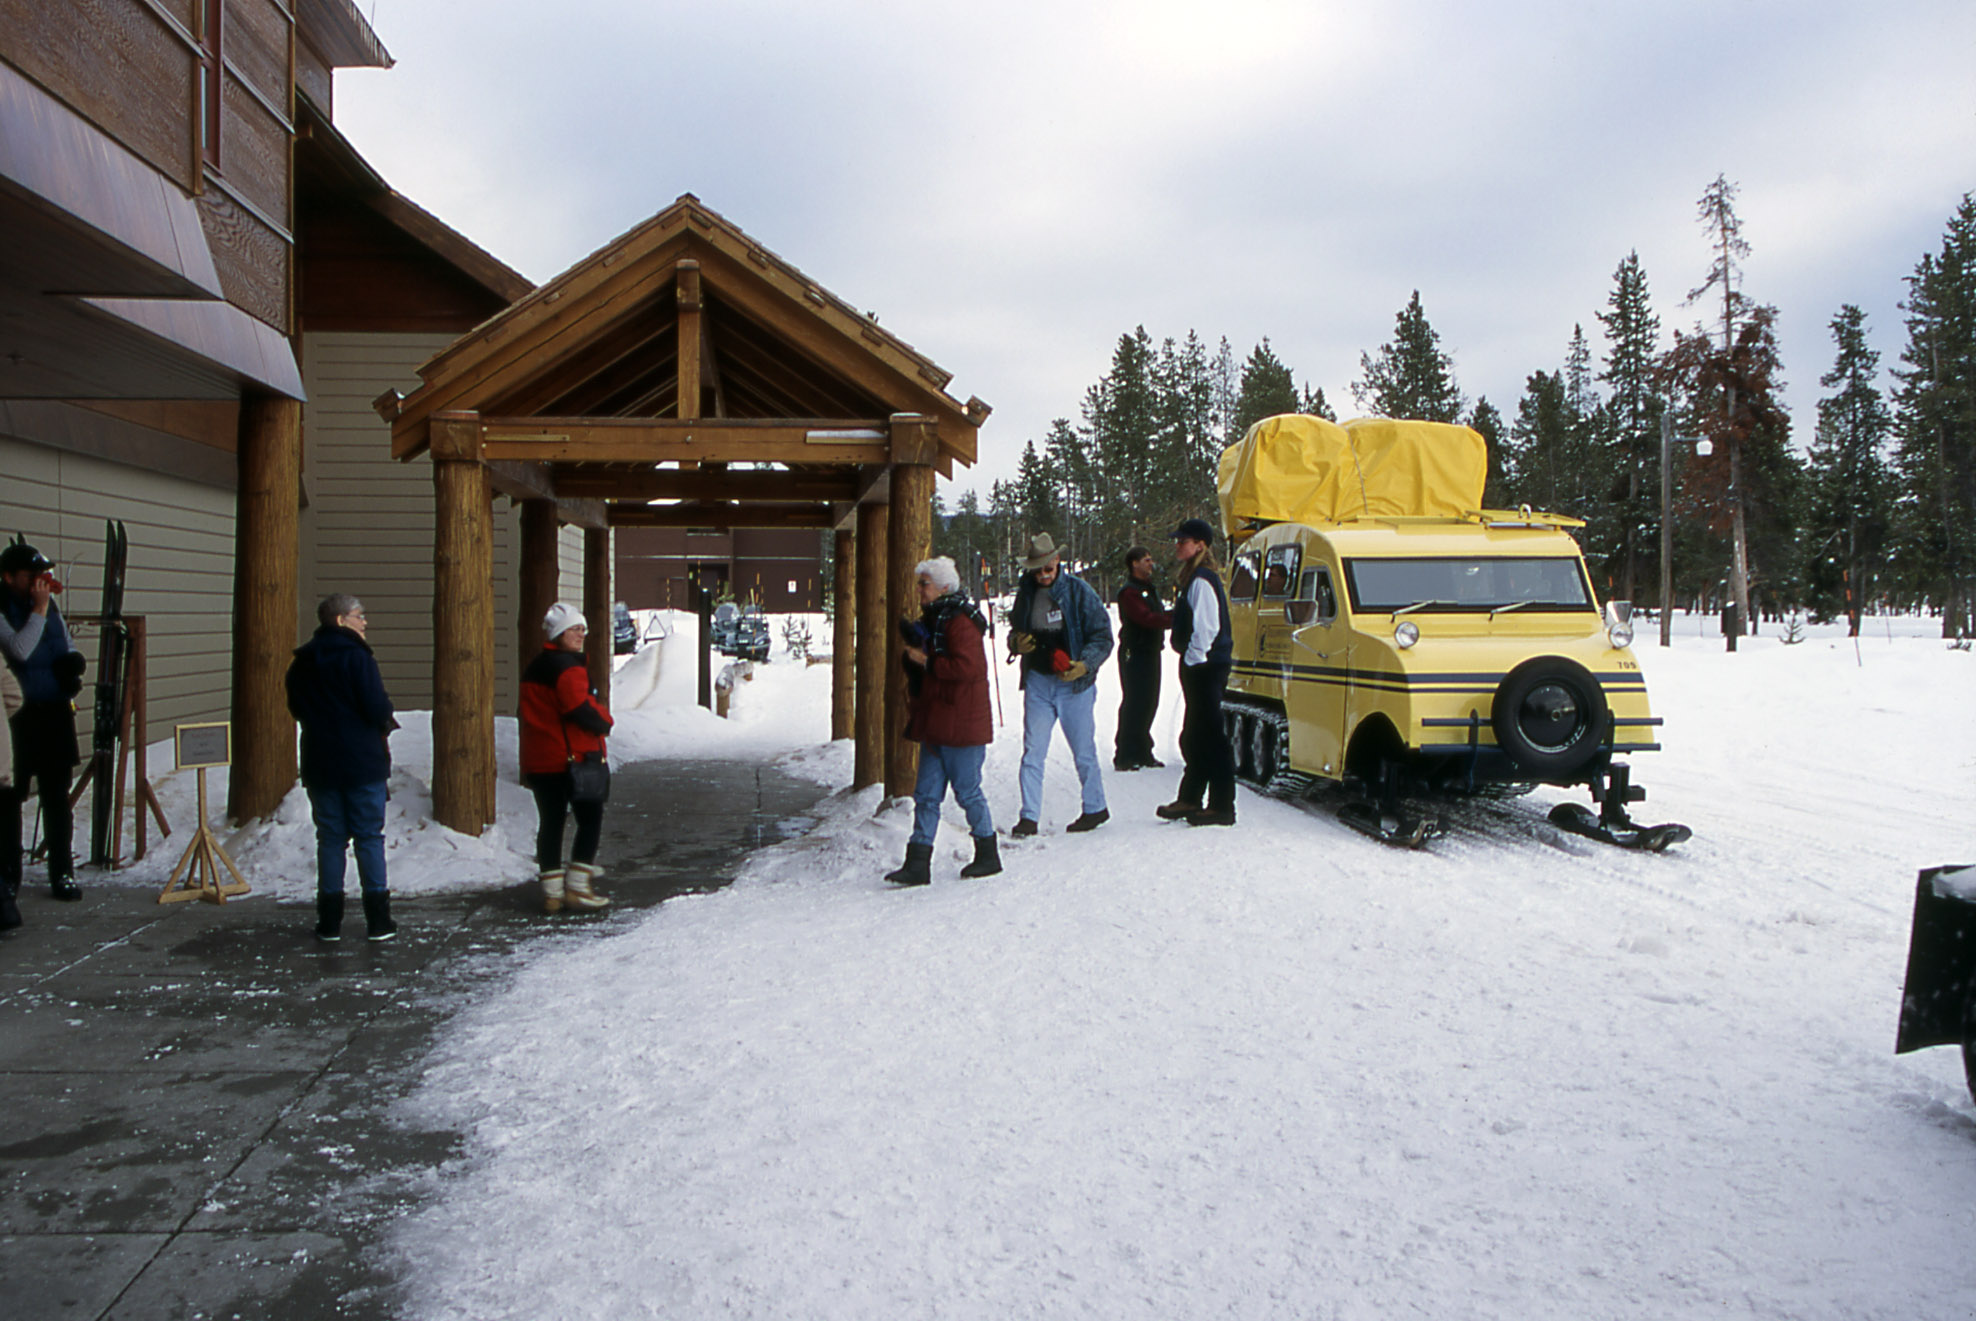 http://yellowstoneinsider.com/wp-content/uploads/2016/02/Yellowstone-Bombardier-Snowcoach-at-Old-Faithful.jpg